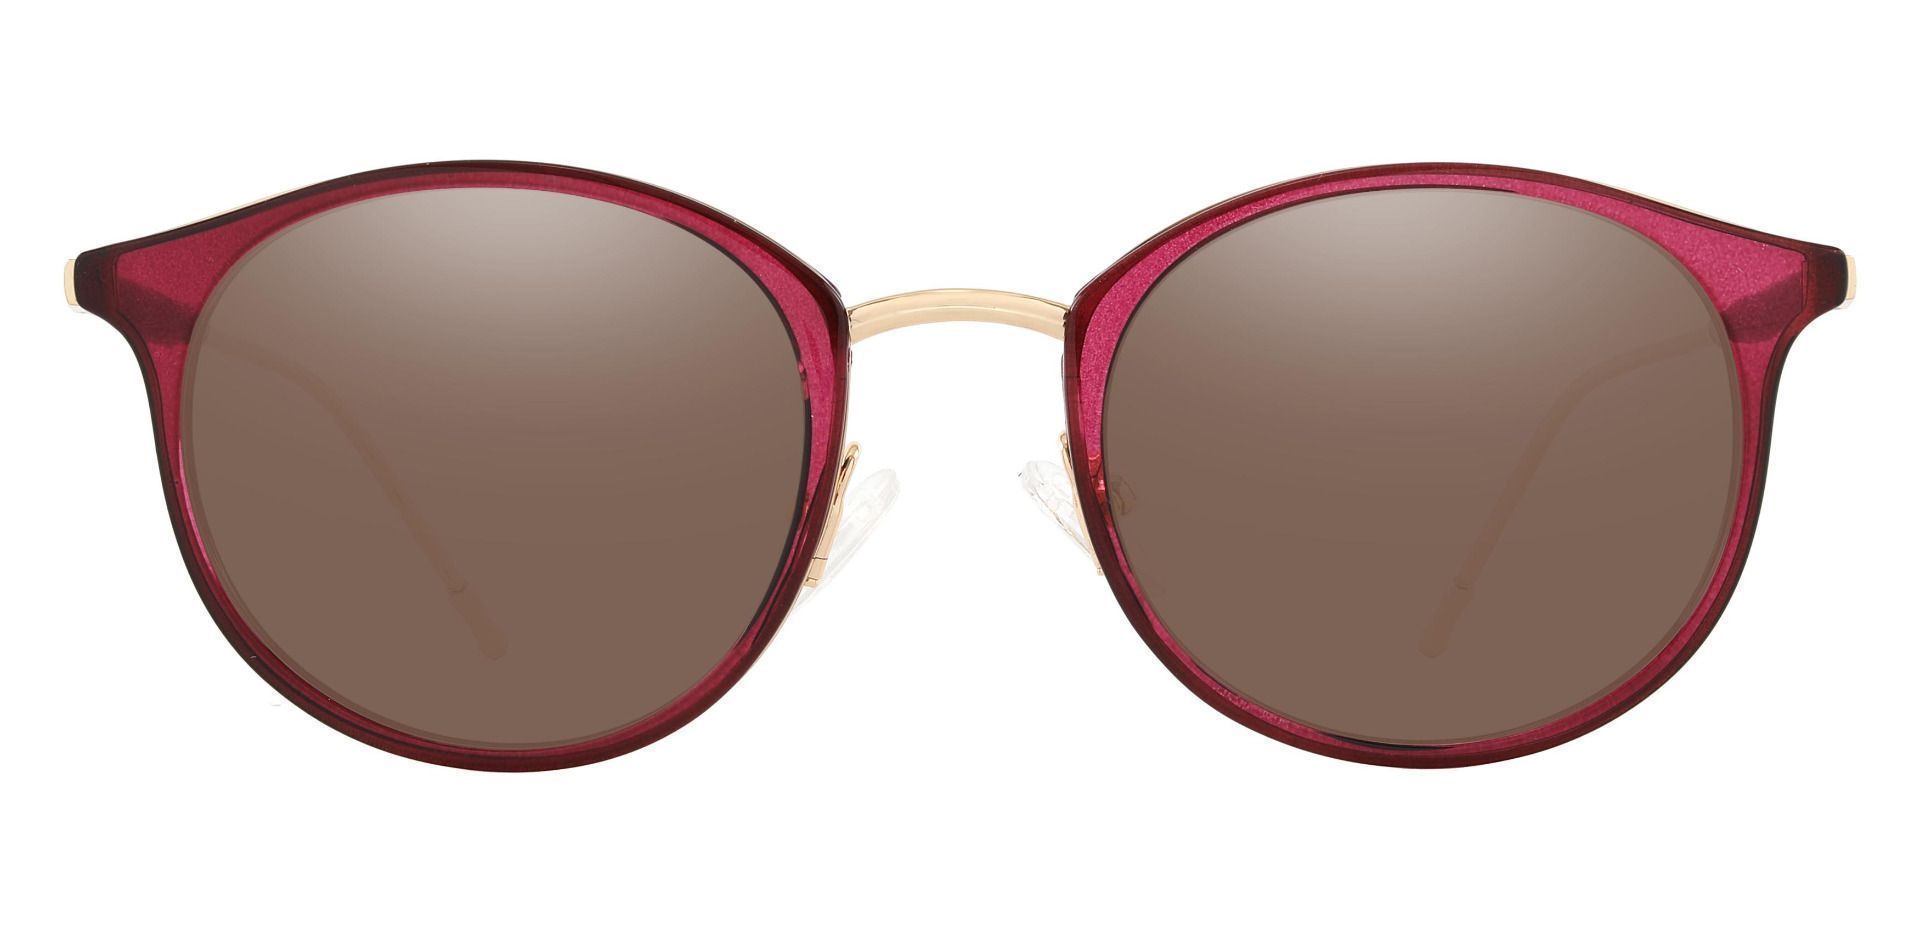 Ellsinore Oval Prescription Sunglasses - Purple Frame With Brown Lenses